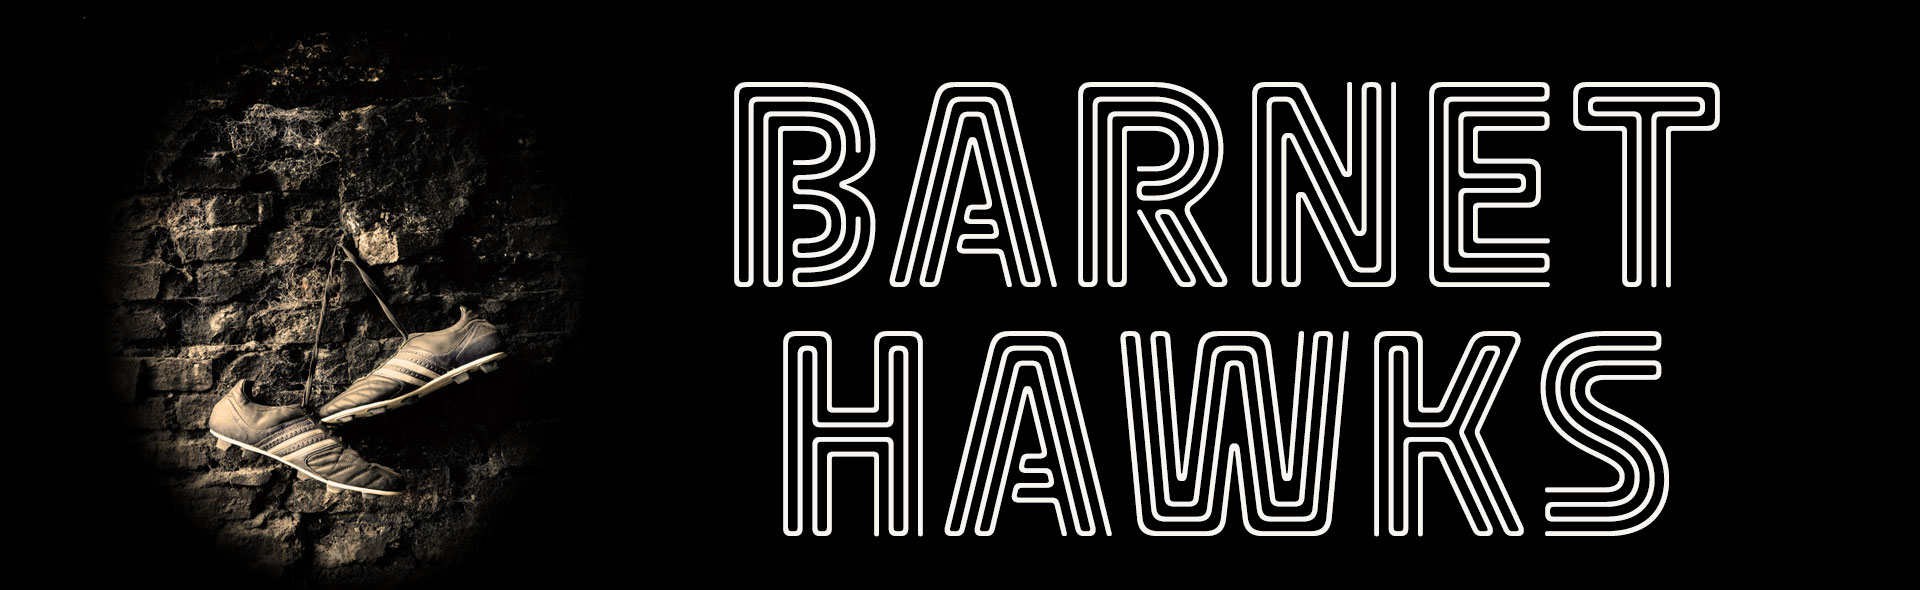 Ariel Theatre Company Presents: Barnet Hawks